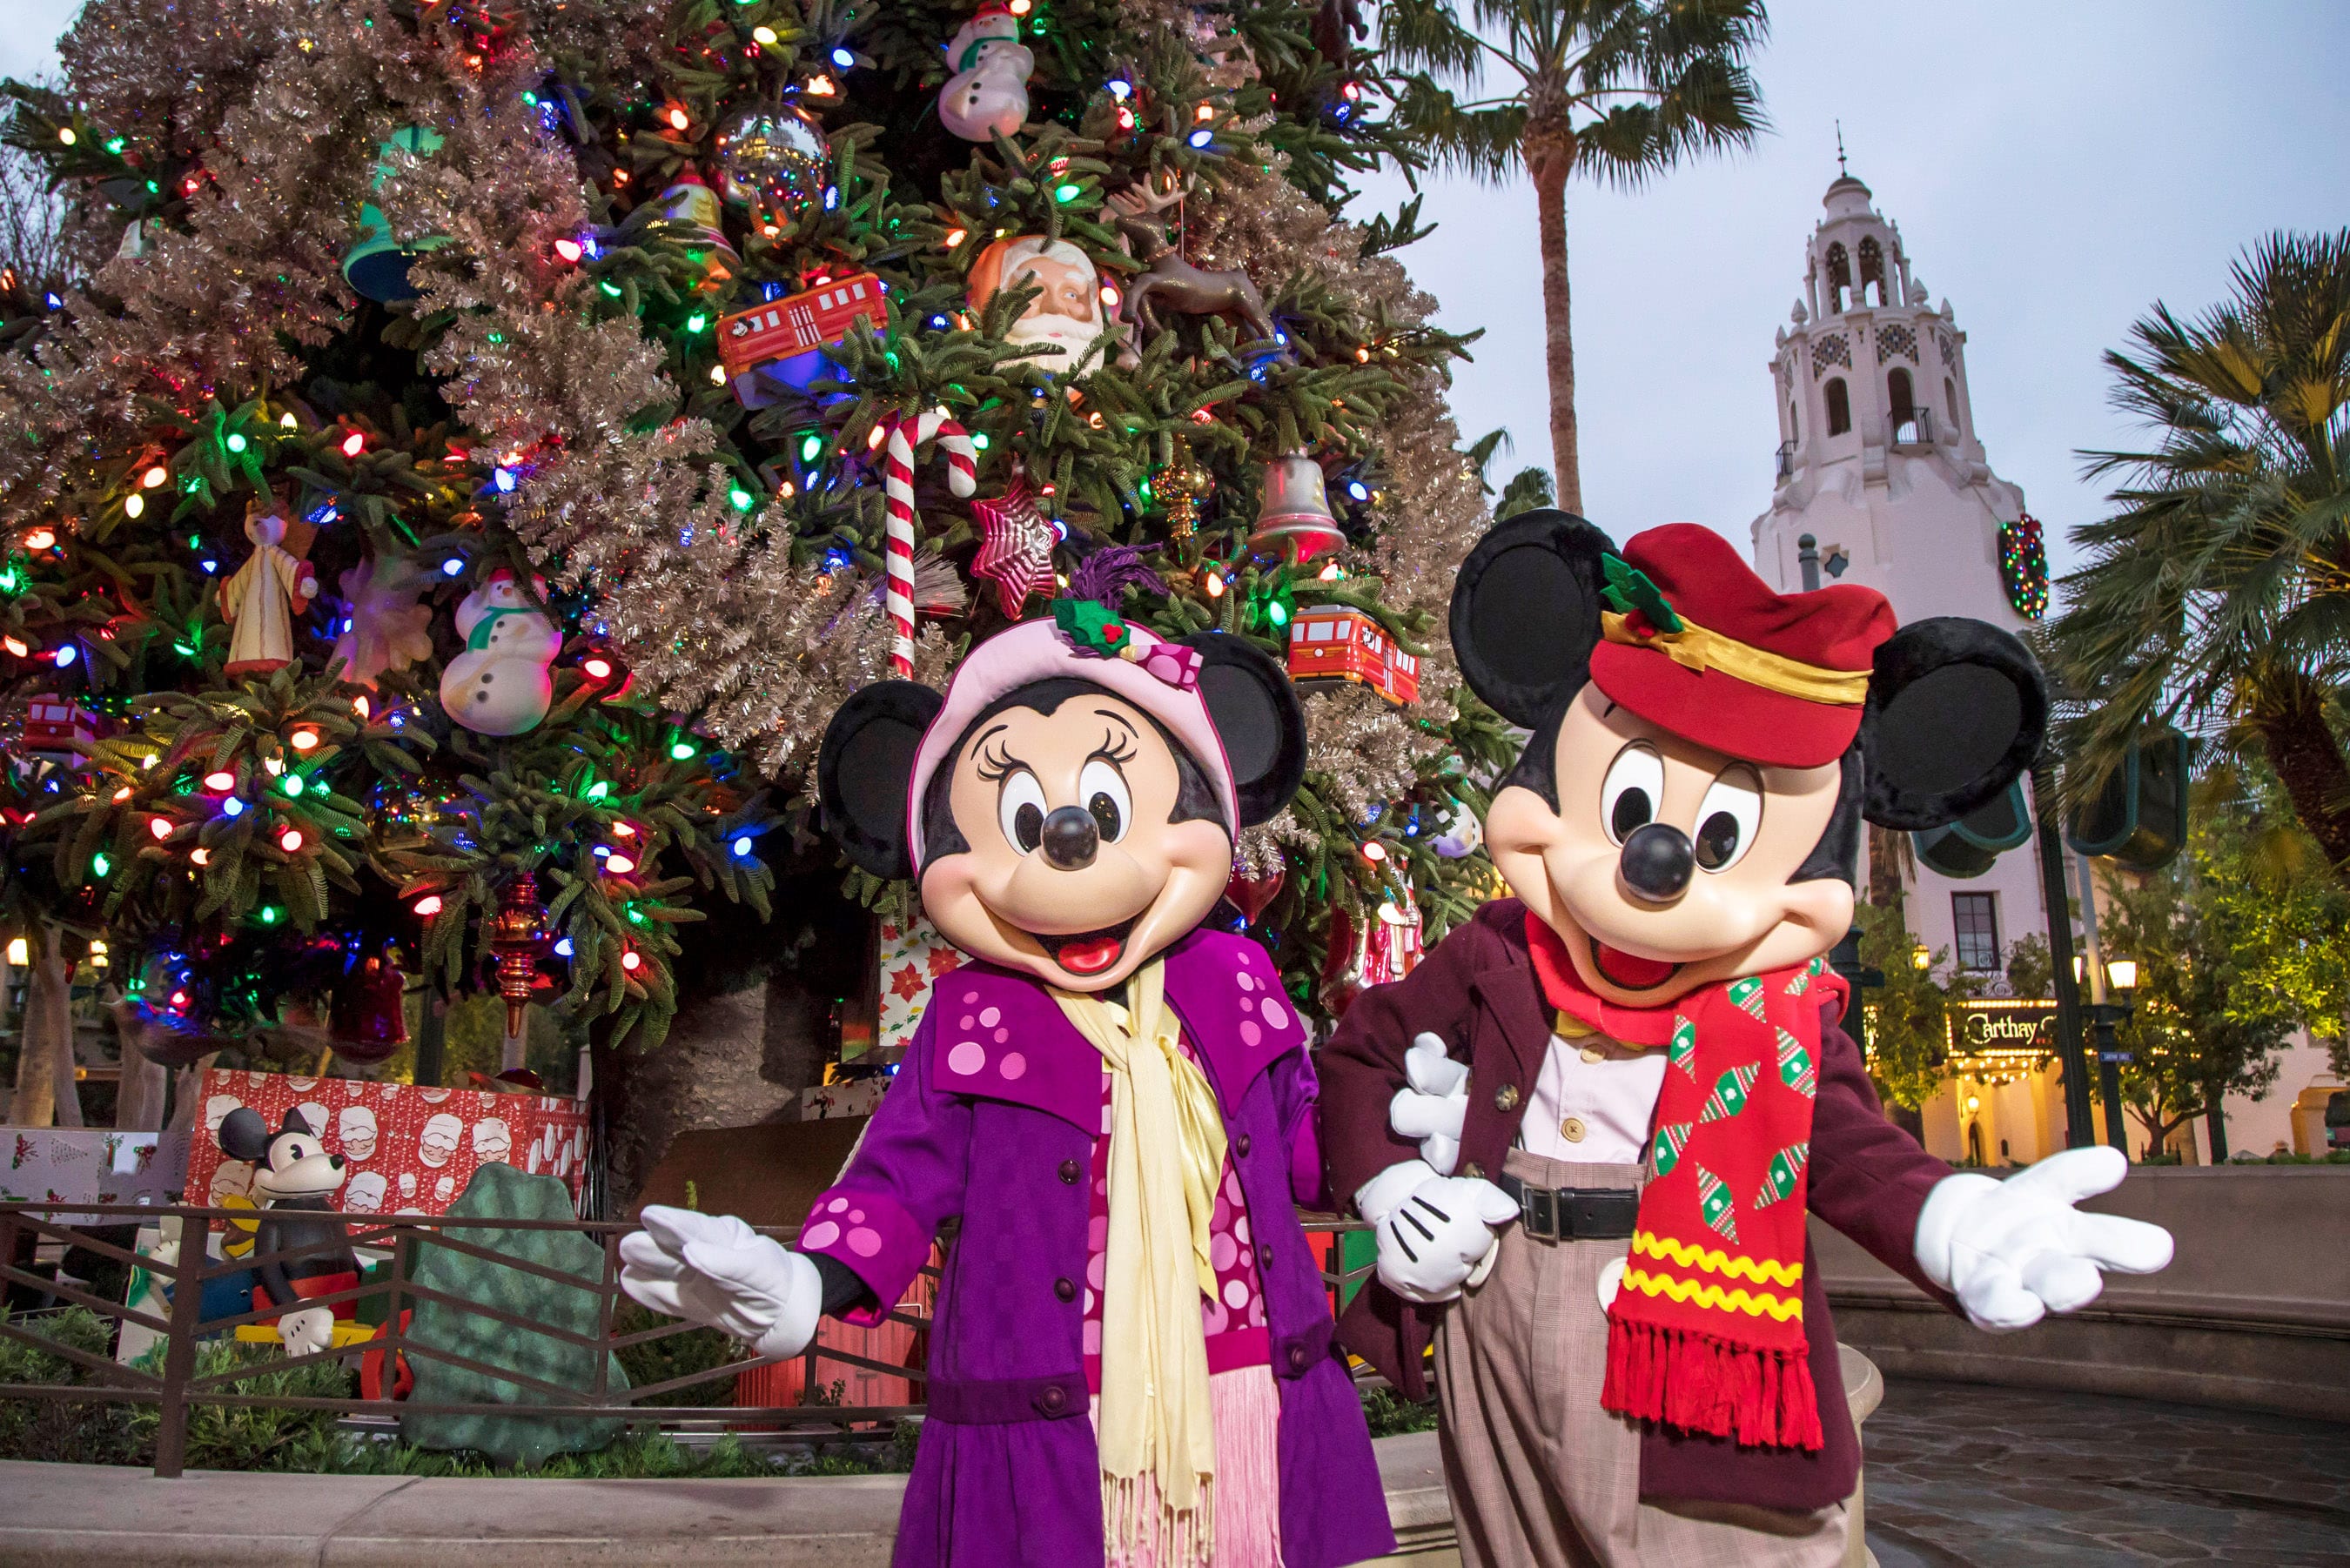 Disney Parks to Bring Holiday Cheer Tomorrow for #HalfwayToTheHolidays